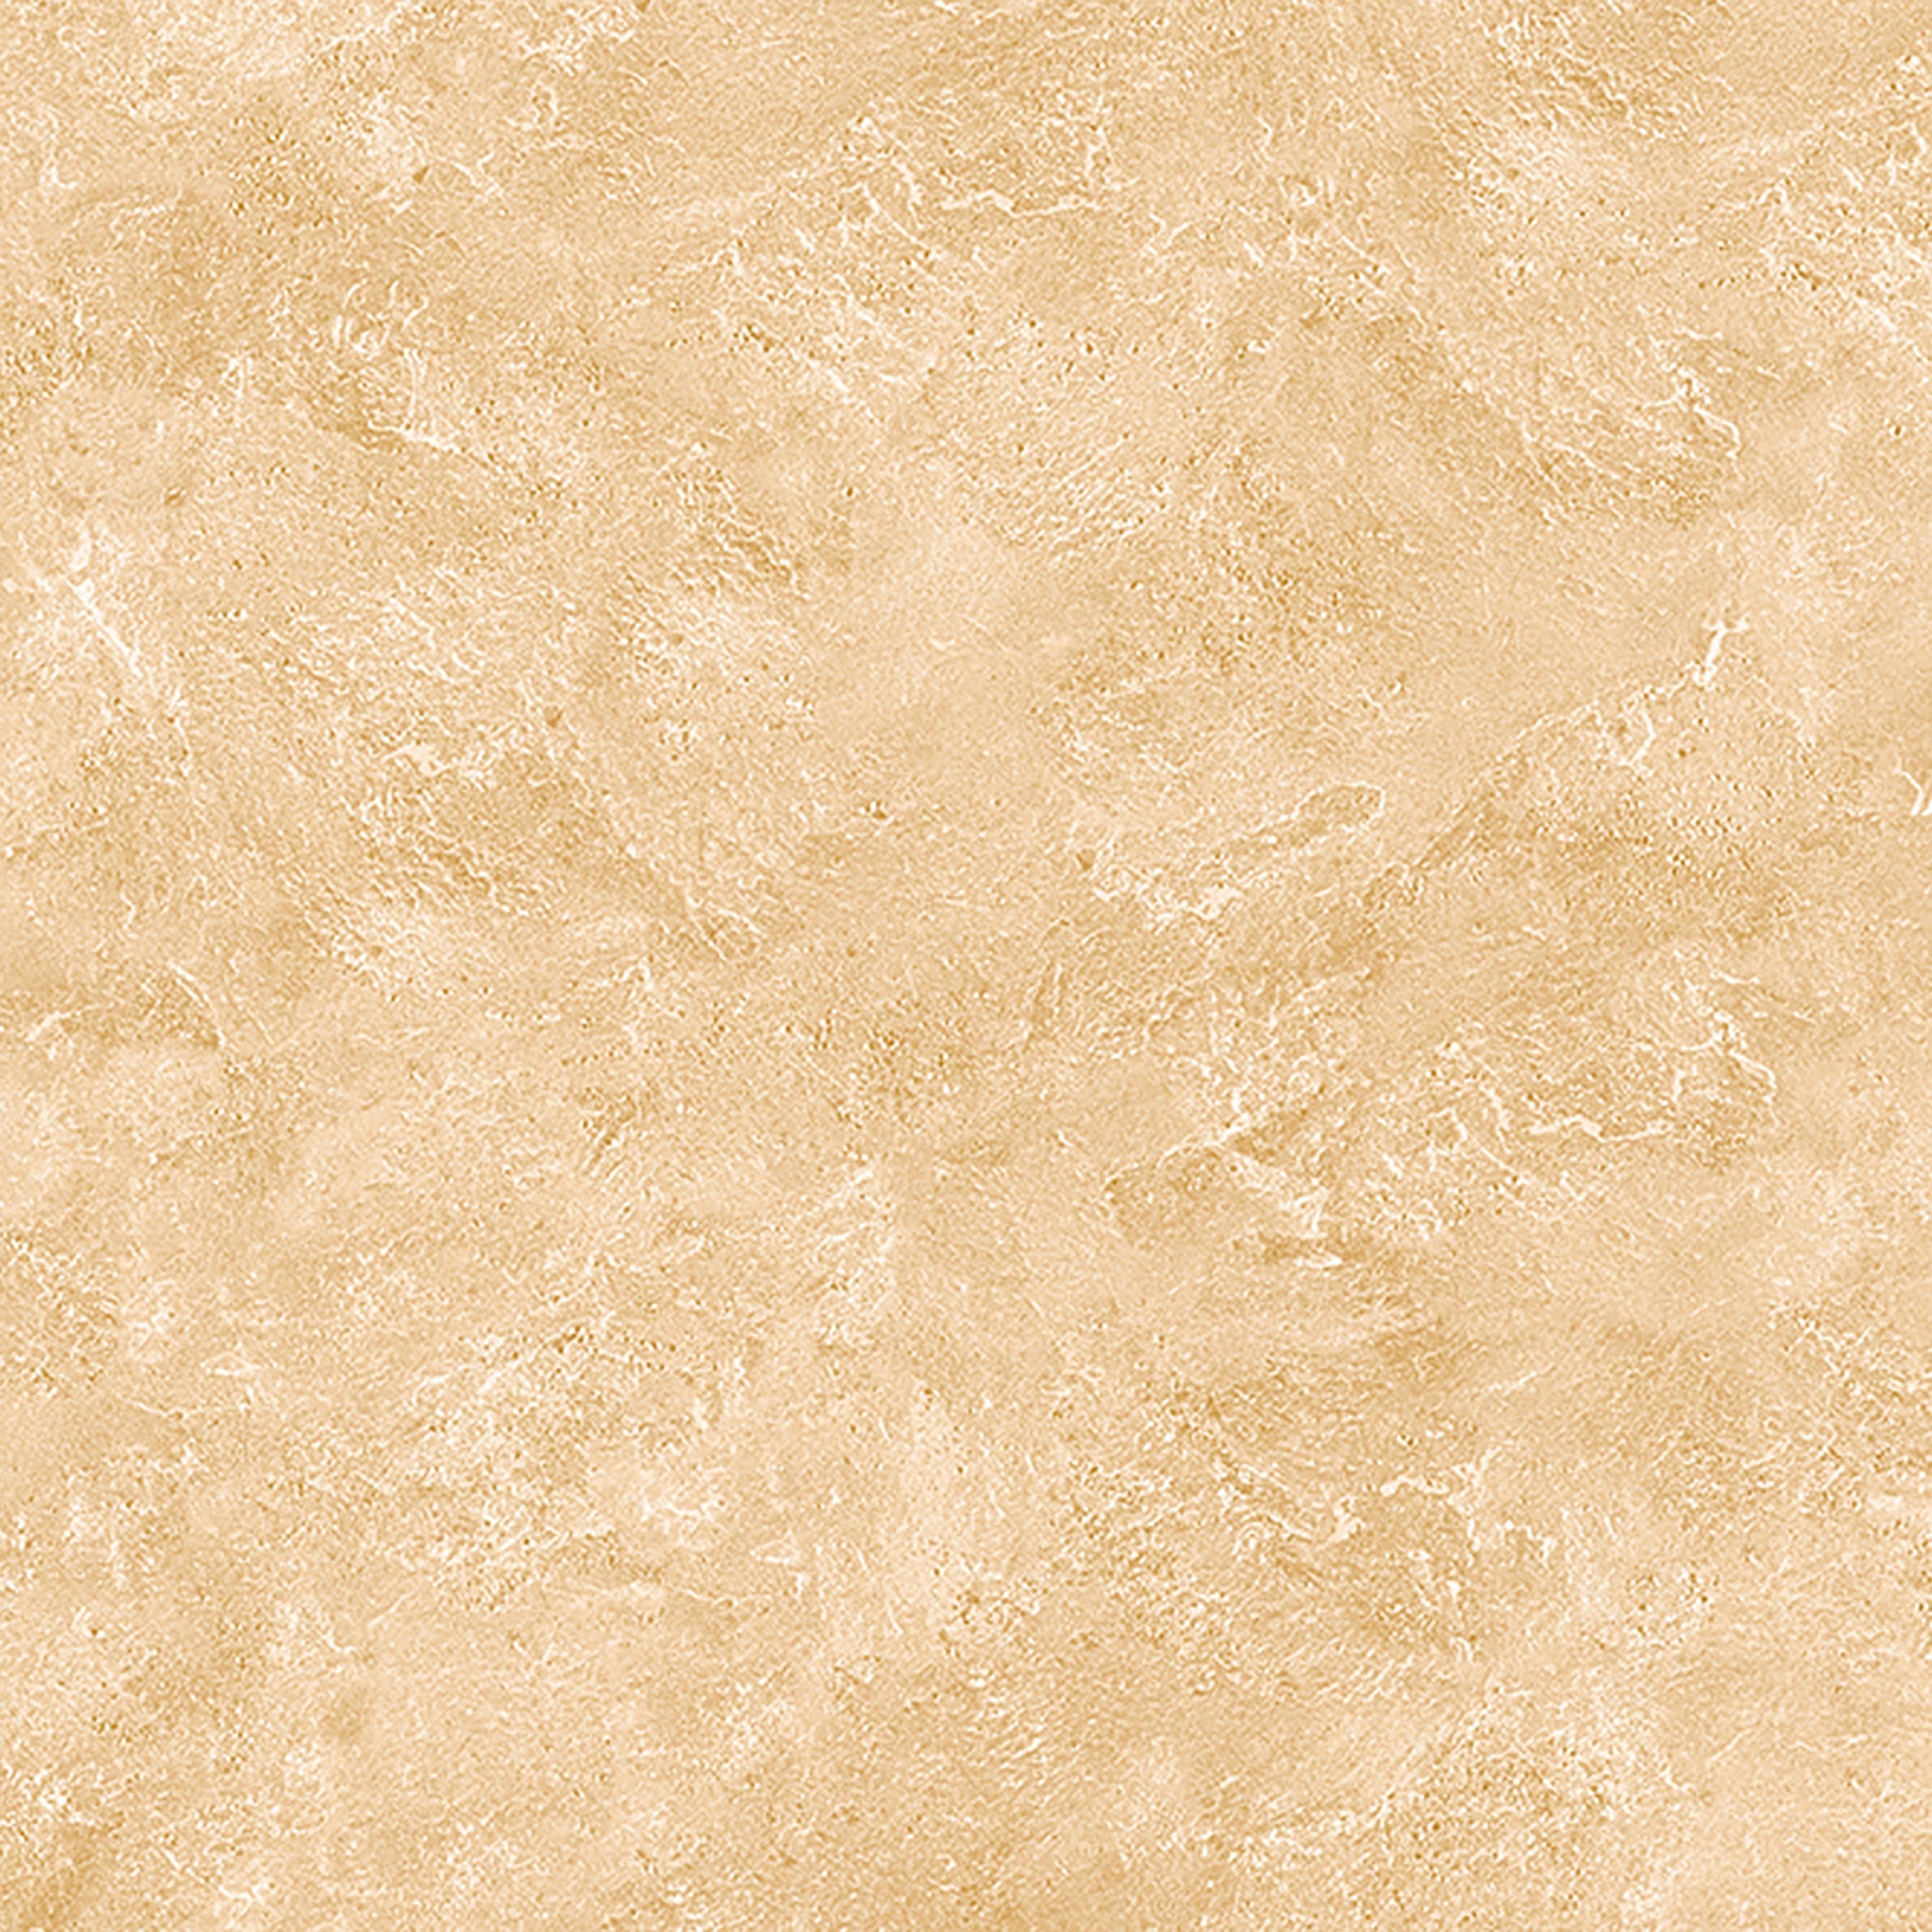 Surface Wheat Golden - 34519-3